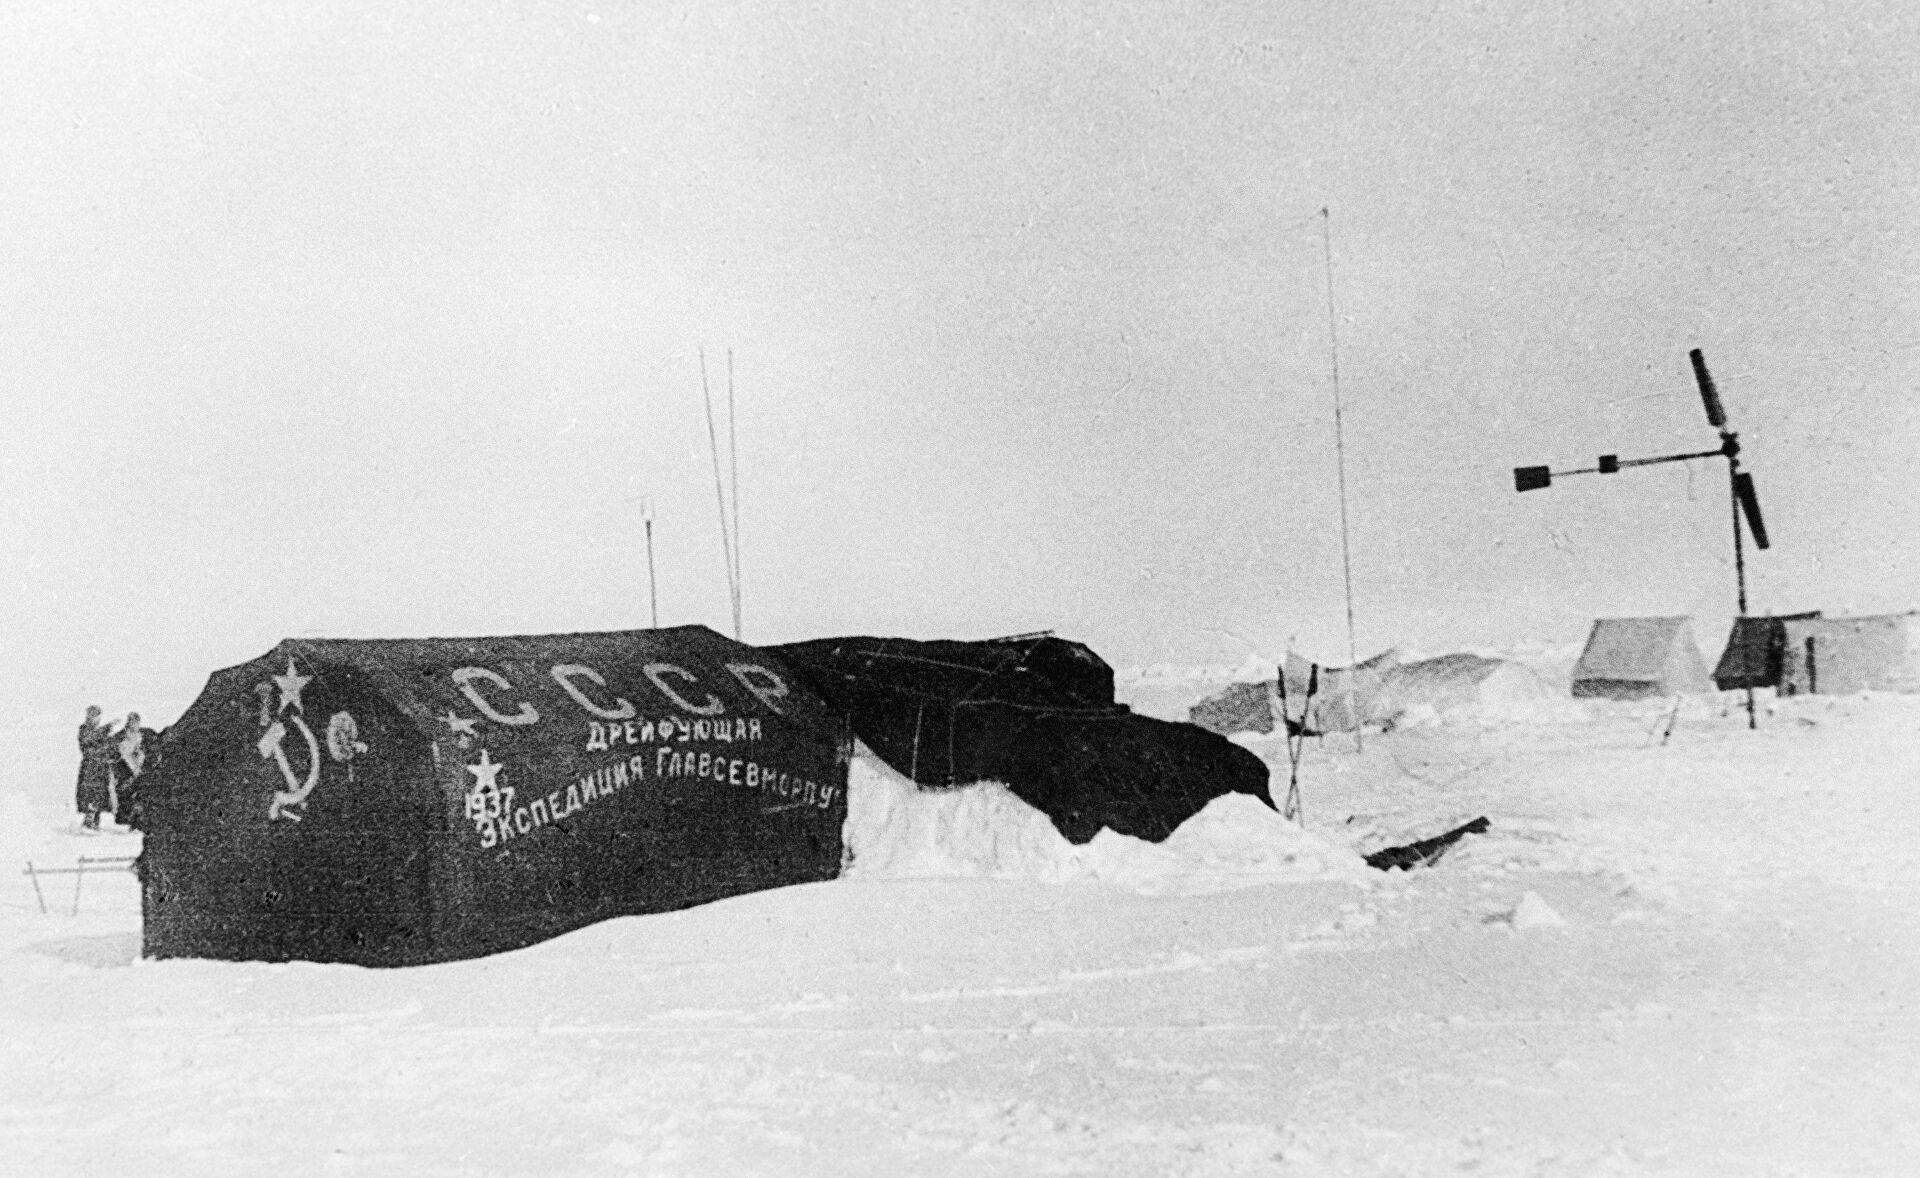 North pole 1. Дрейфующая Полярная станция Северный полюс 1. Станция Северный полюс 1 Папанин. Первая научная дрейфующая станция «Северный полюс-1».. Первая Полярная Экспедиция Северный полюс.